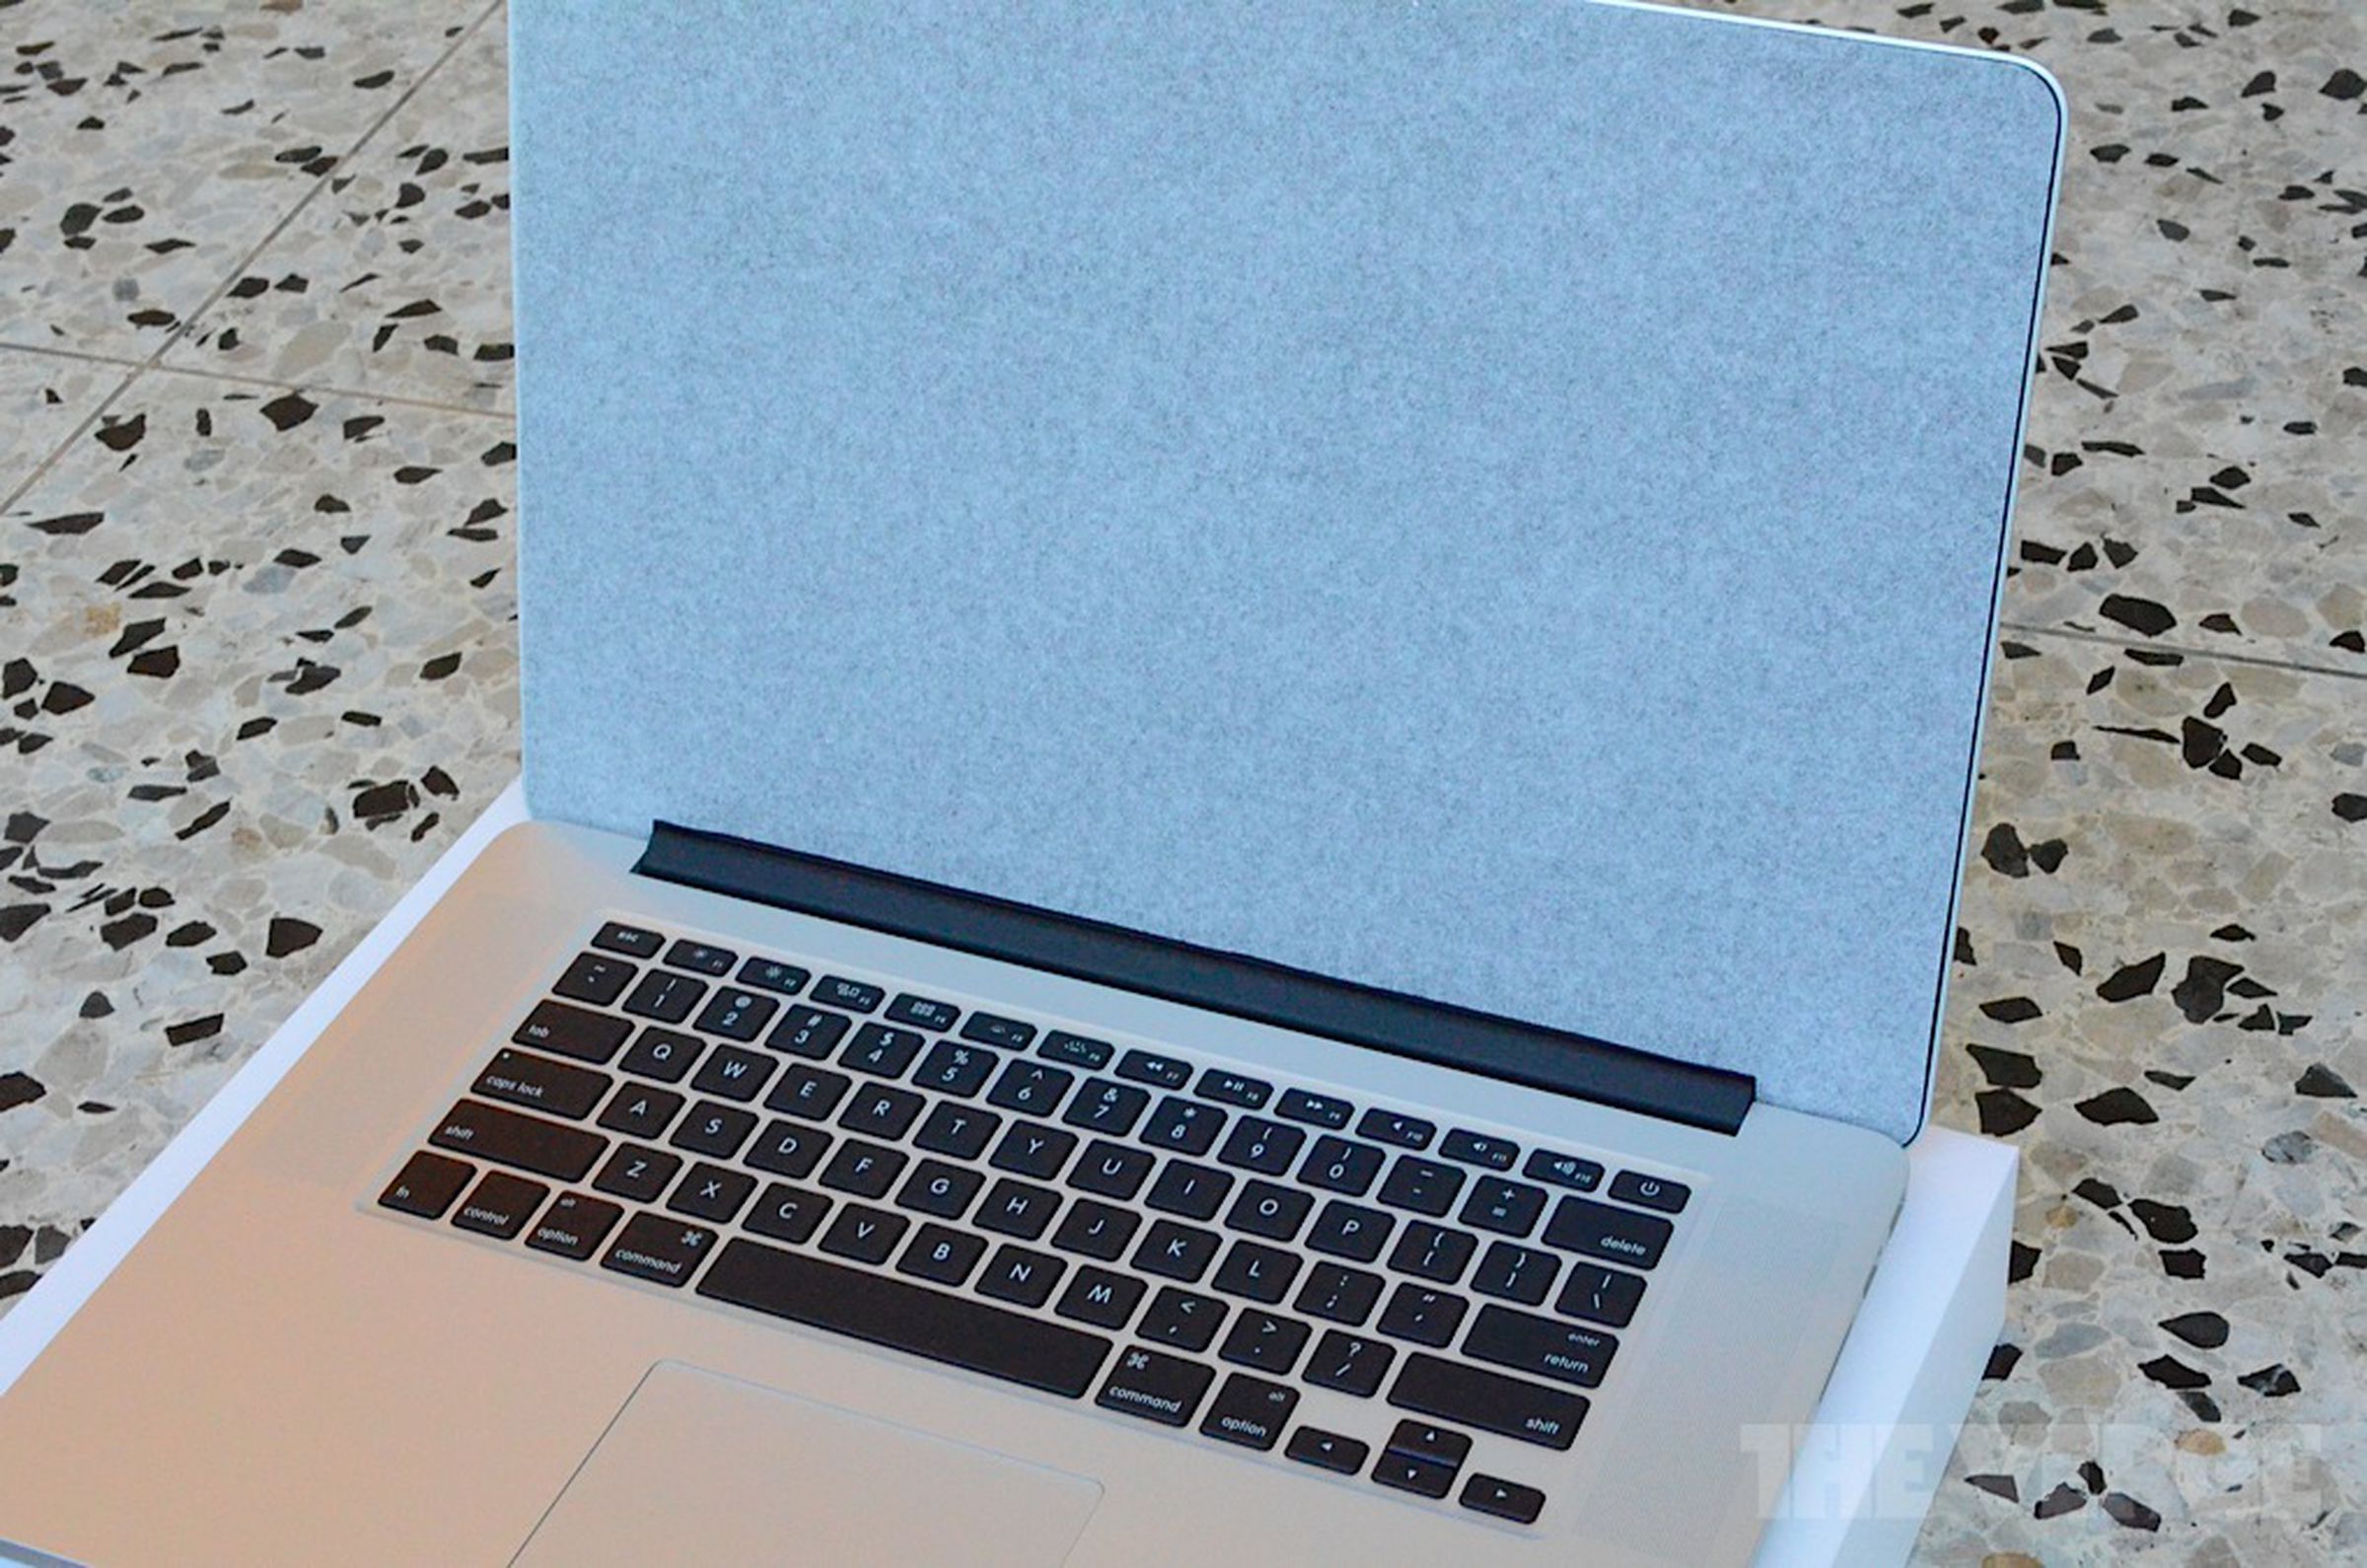 New MacBook Pro with Retina display hands-on pictures